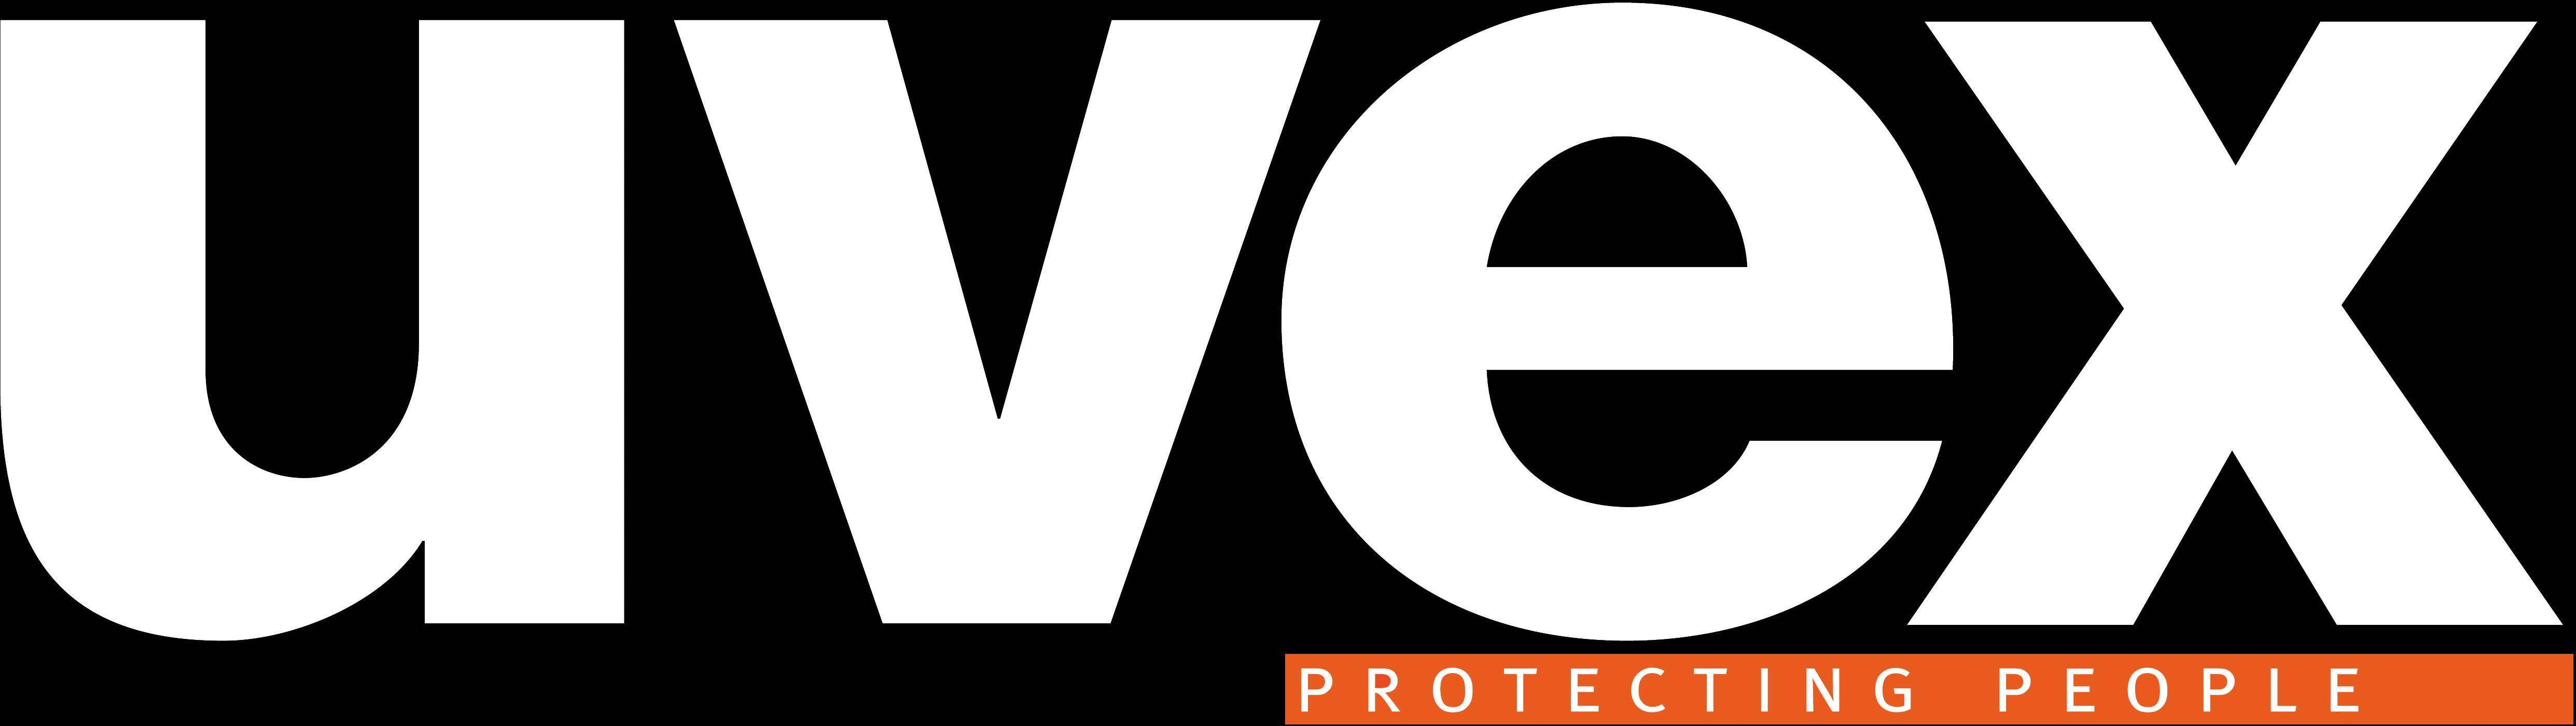 Uvex Logo - LogoDix